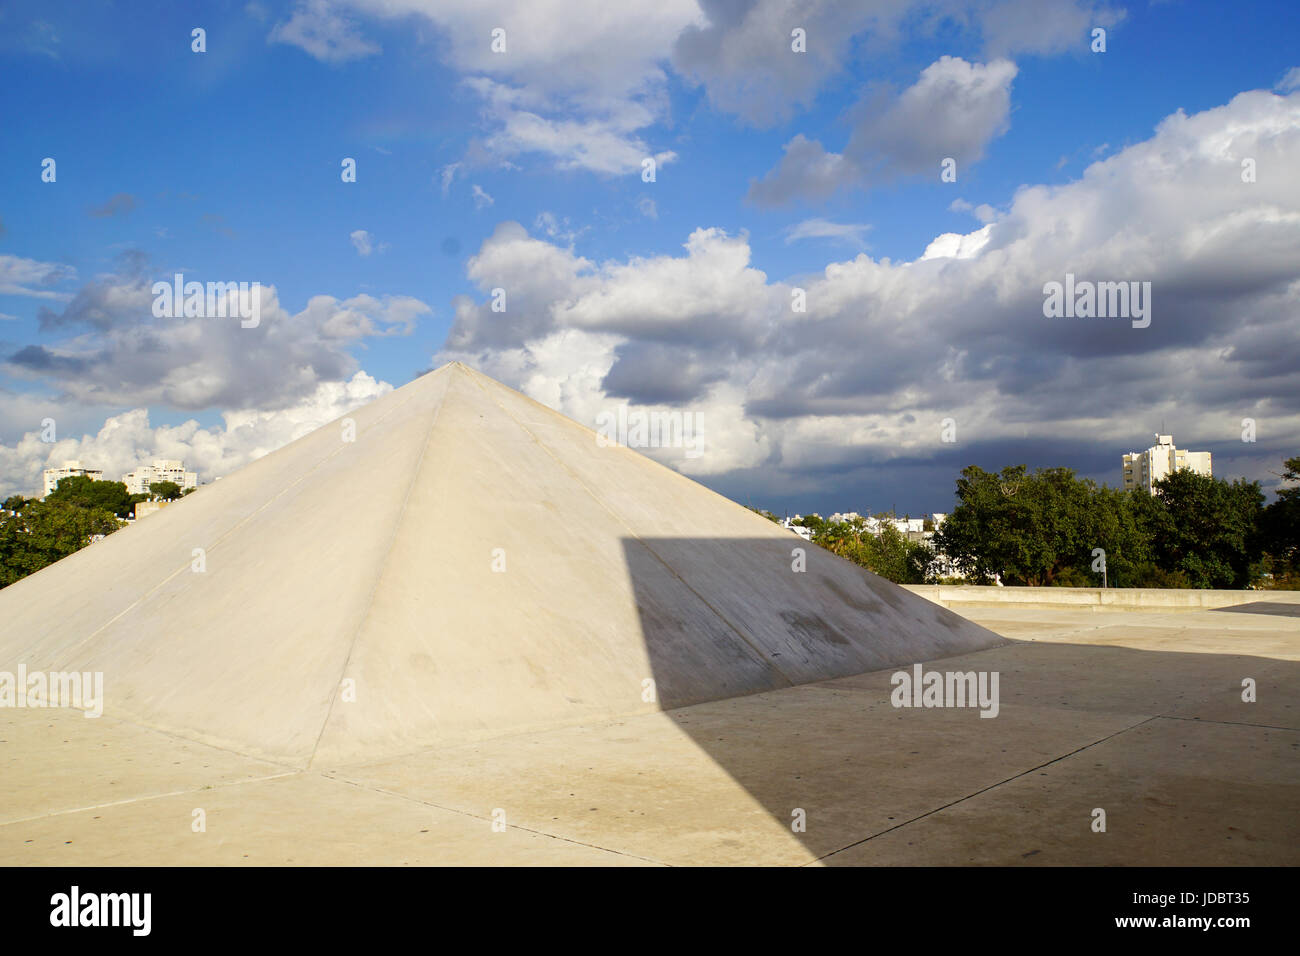 Israel, Tel Aviv, Wolfson Park, White City Statue (1977 - 1988) a sculpture by Dani Karavan (born 1930). This sculpture is also known as White Square Stock Photo